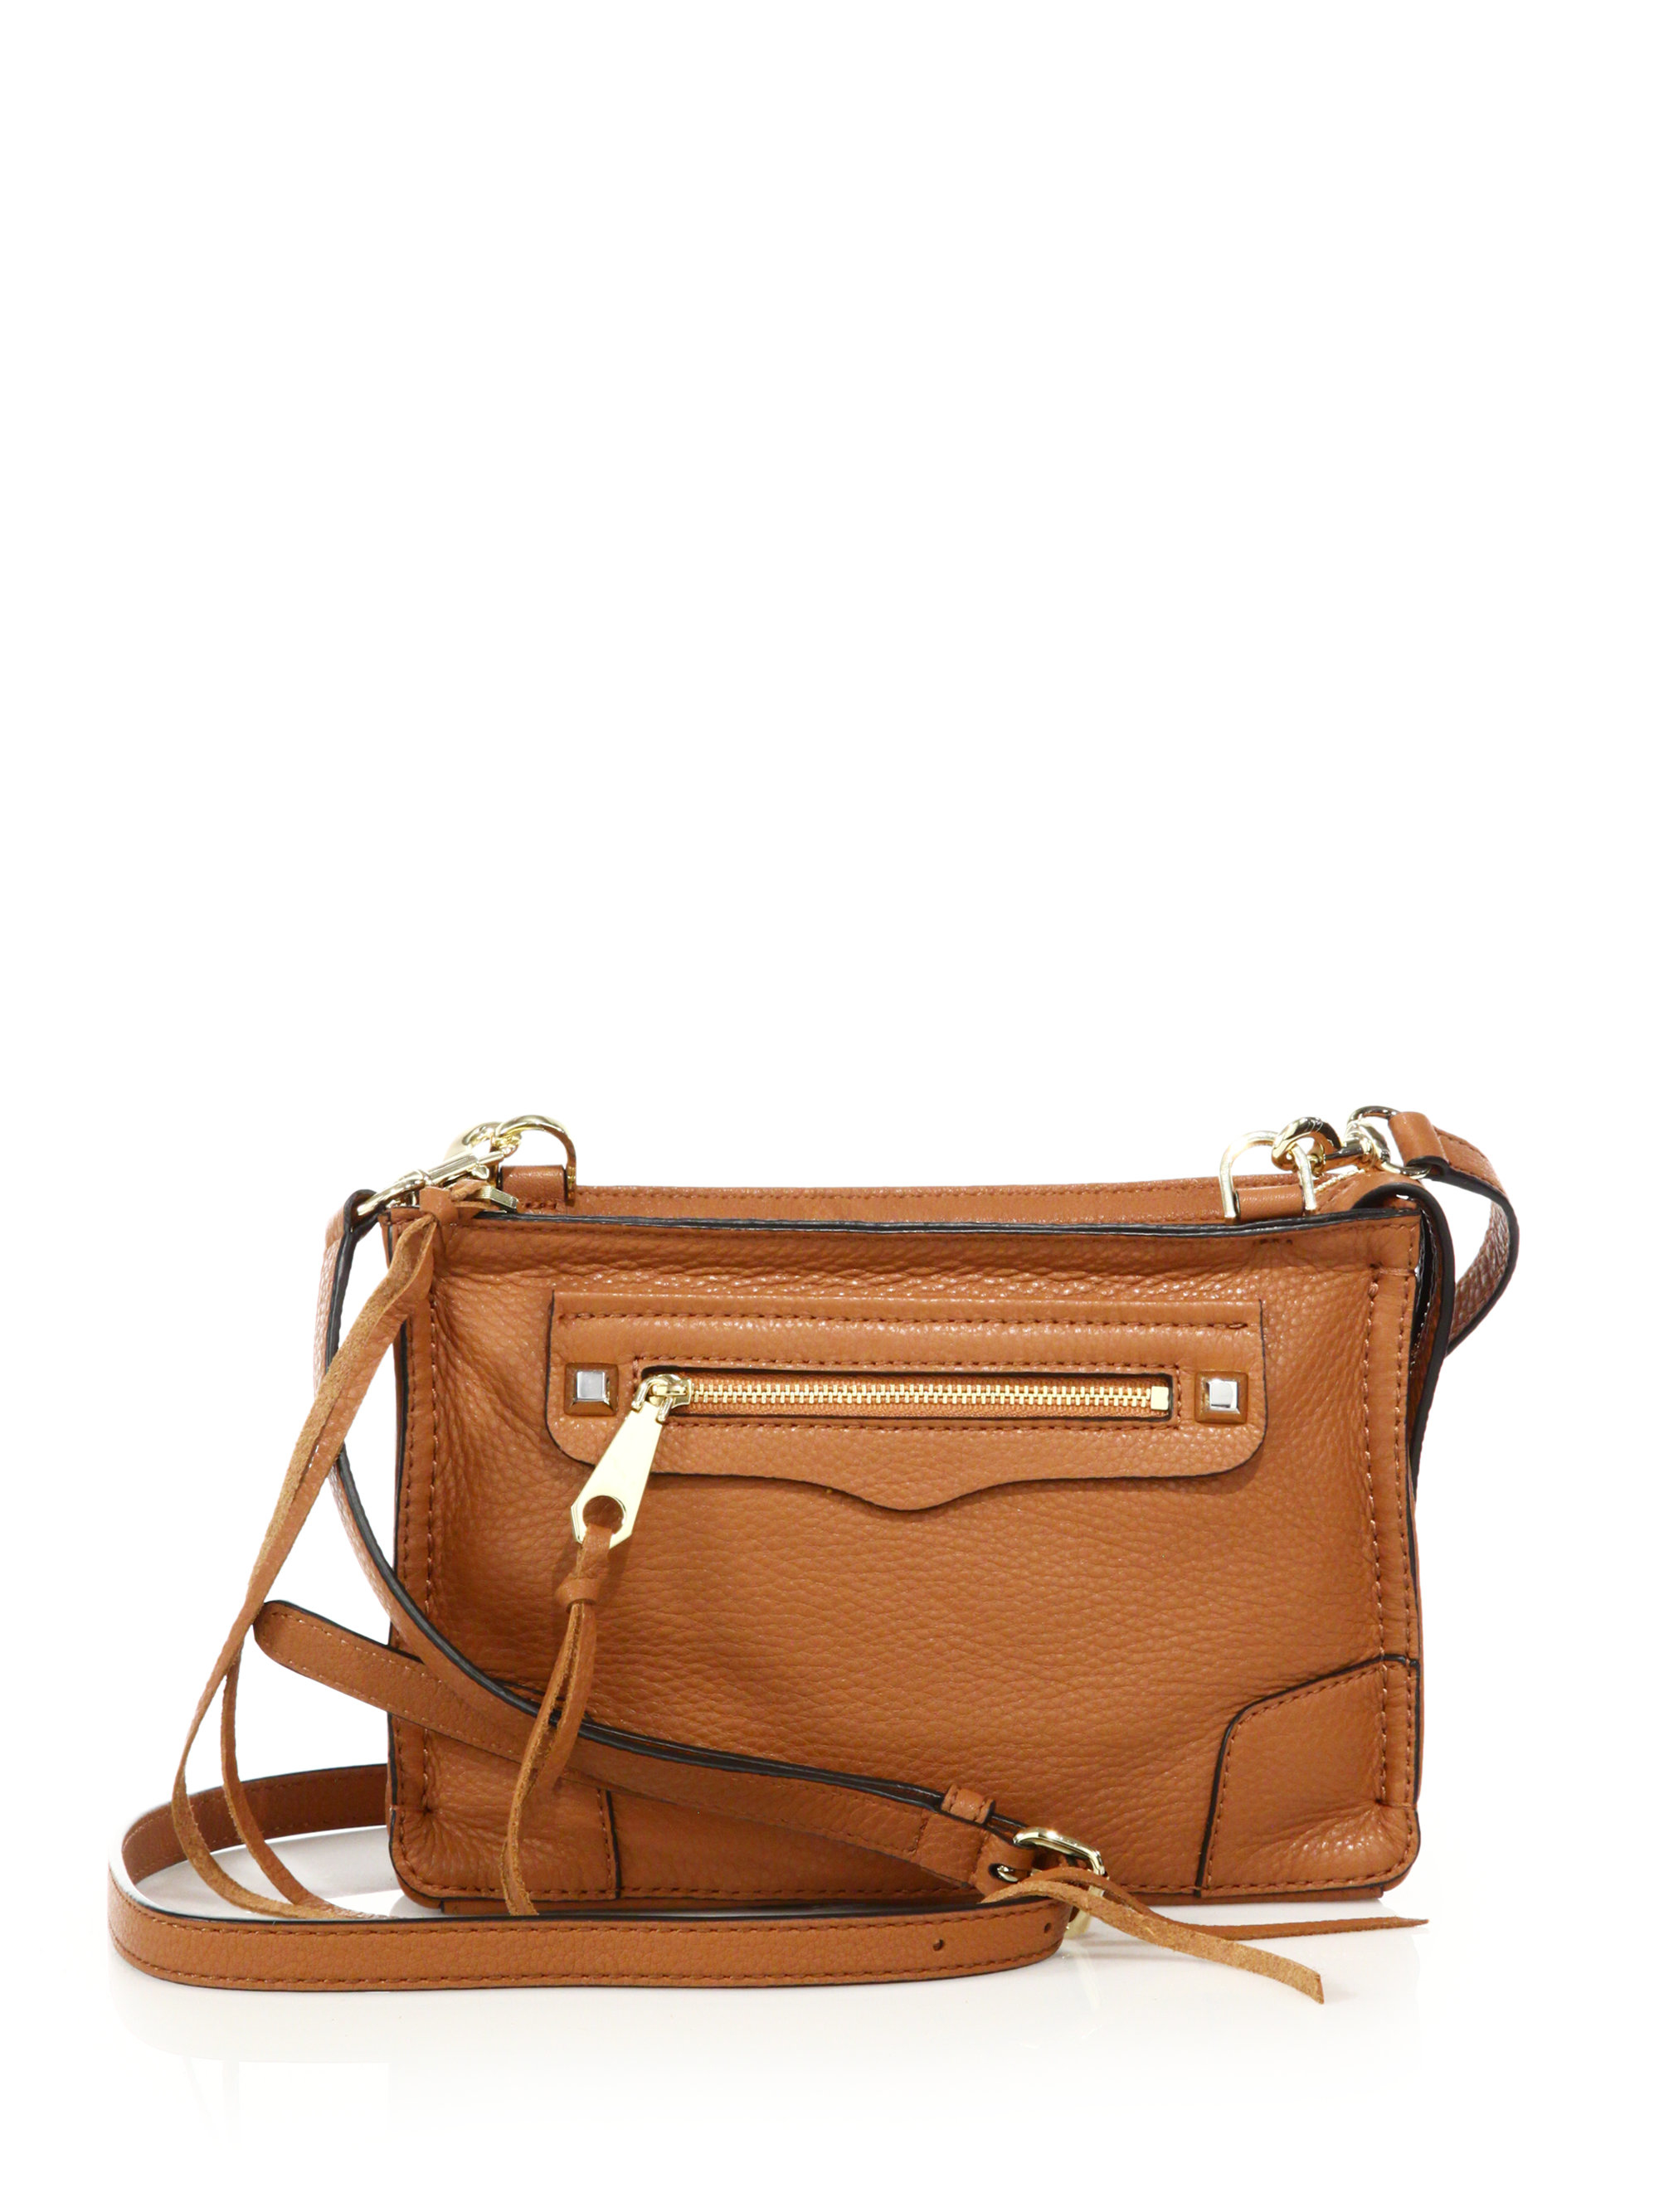 Rebecca Minkoff Regan Leather Crossbody Bag in Brown | Lyst